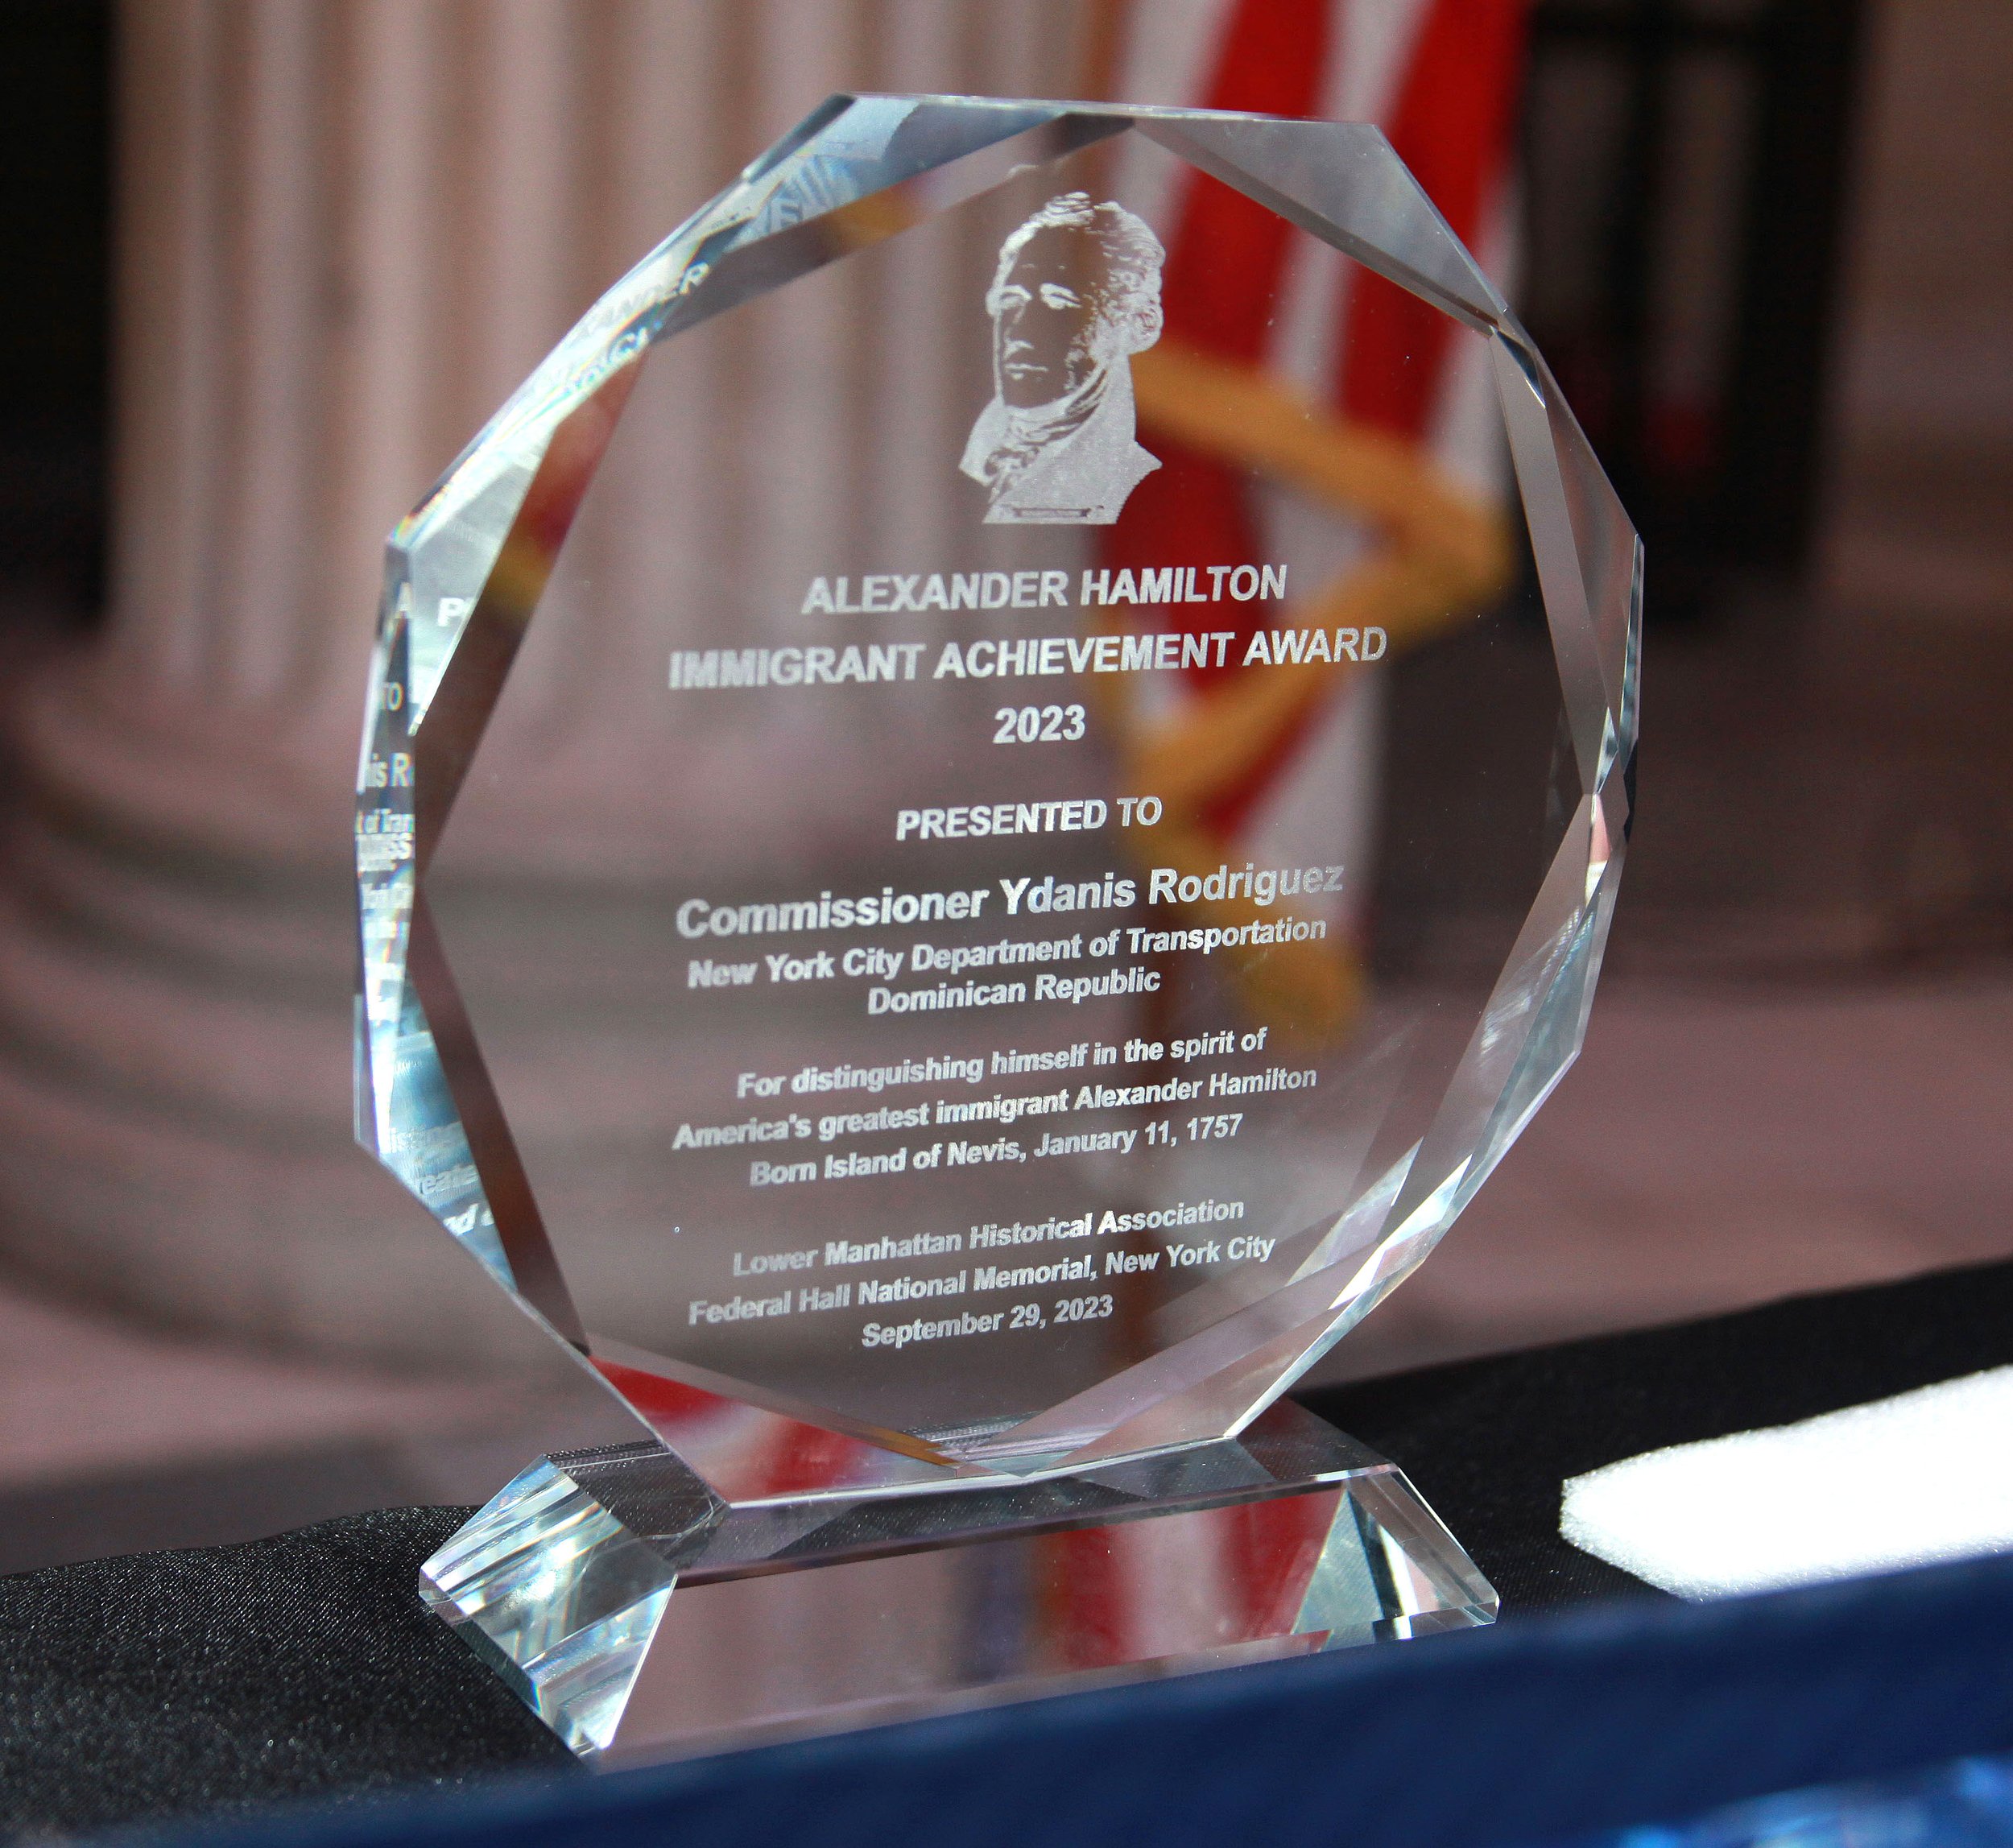  The Alexander Hamilton Immigrant Achievement Award 